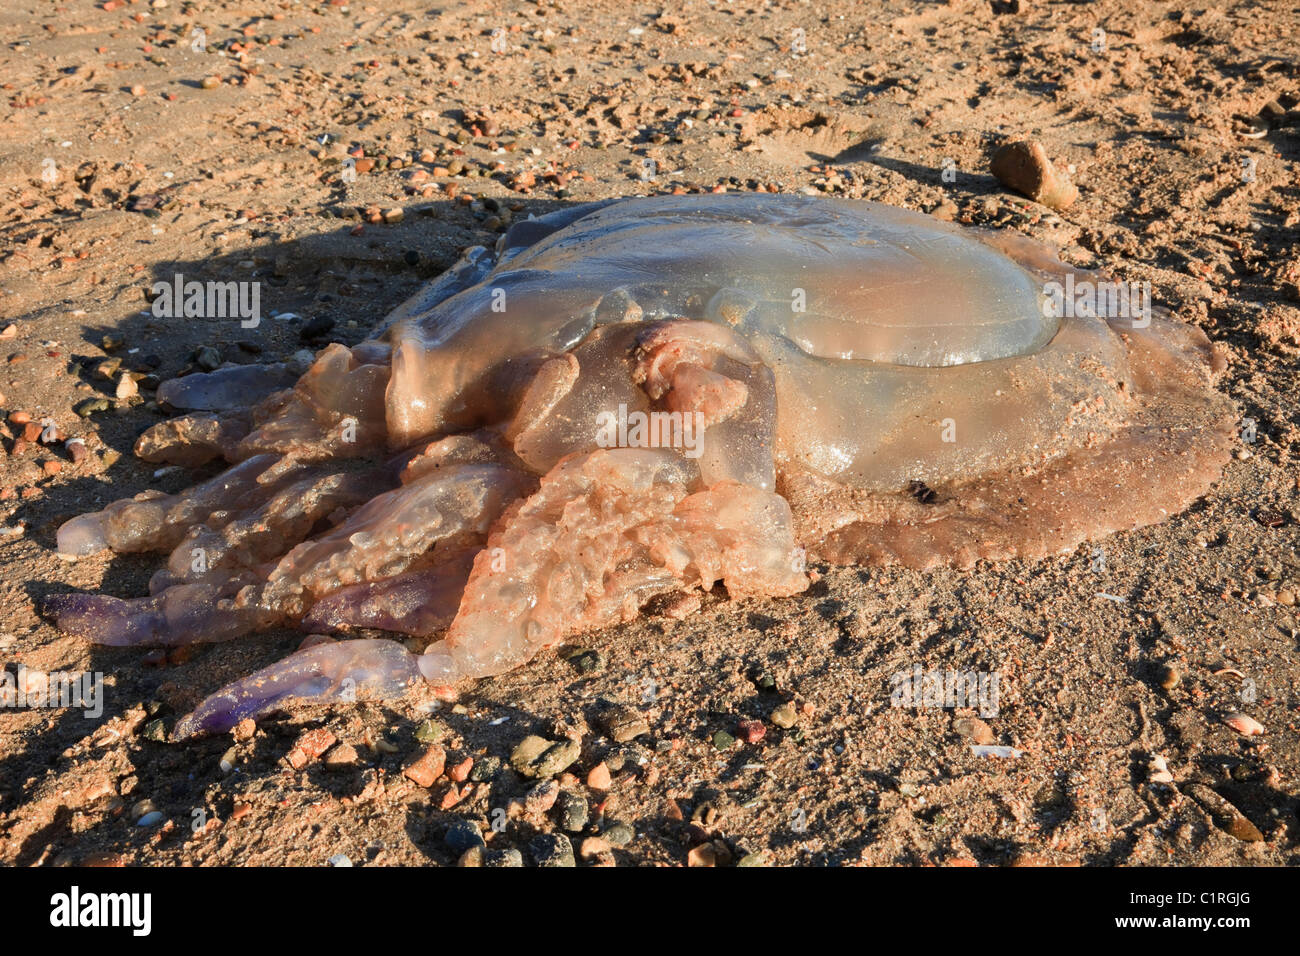 North Wales, UK. Dead Barrel Jellyfish (Rhizostoma octopus) (Rhizostoma pulmo) washed ashore on the beach Stock Photo